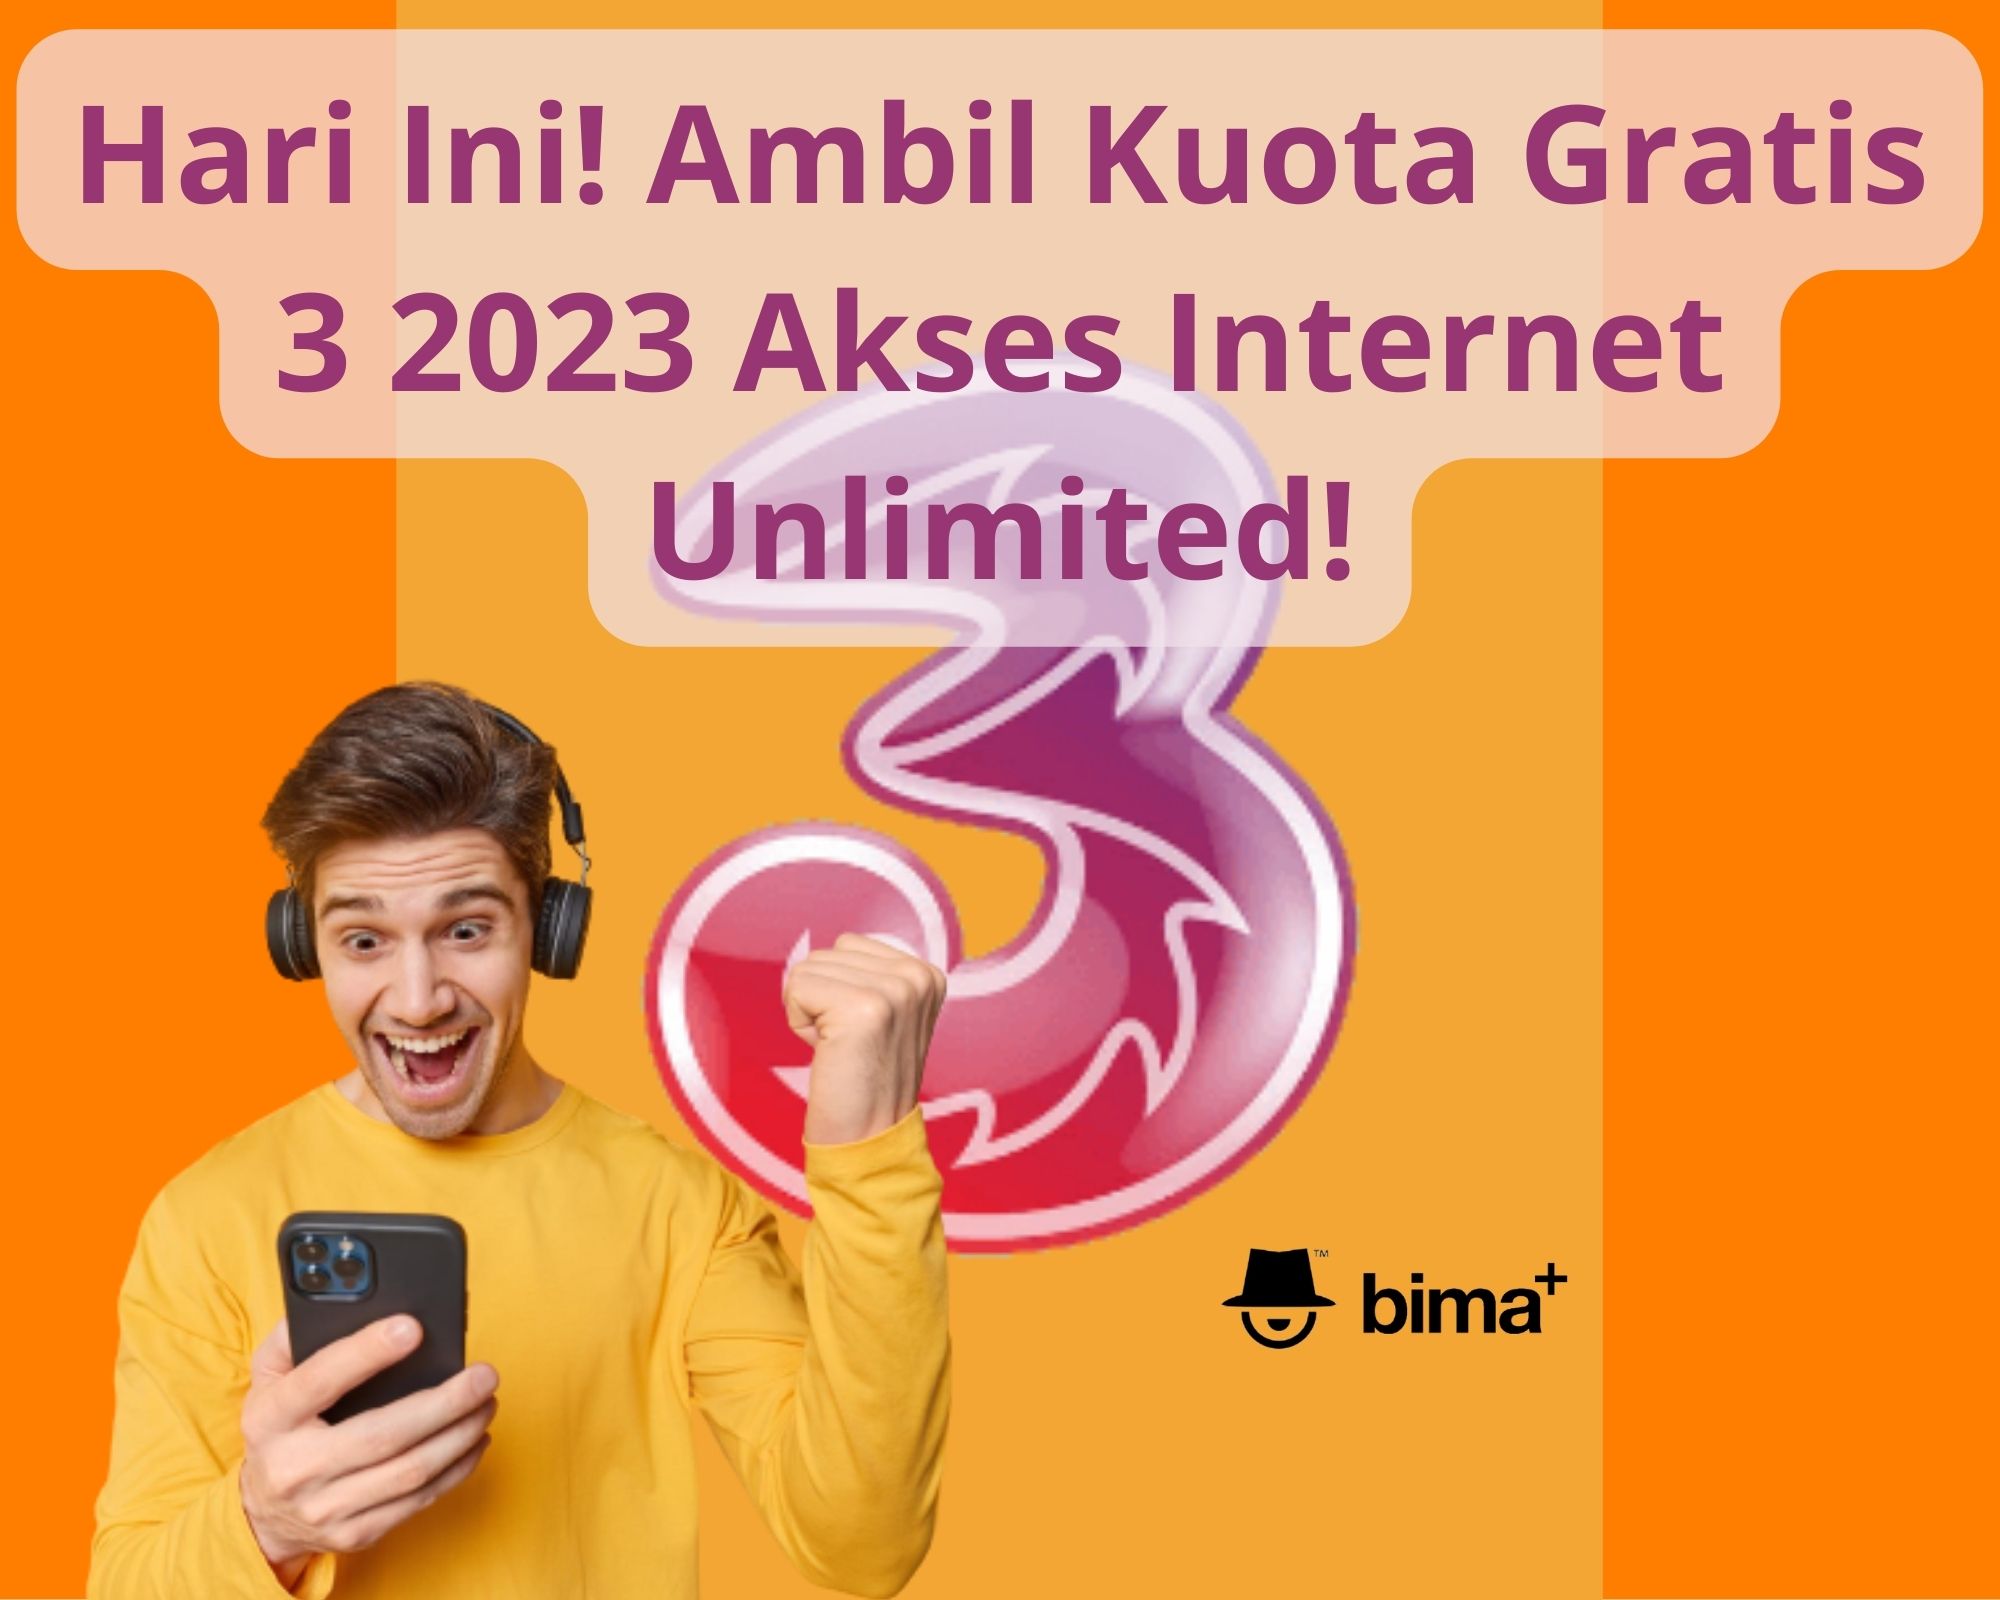 Hari Ini! Ambil Kuota Gratis 3 2023 Akses Internet Unlimited!